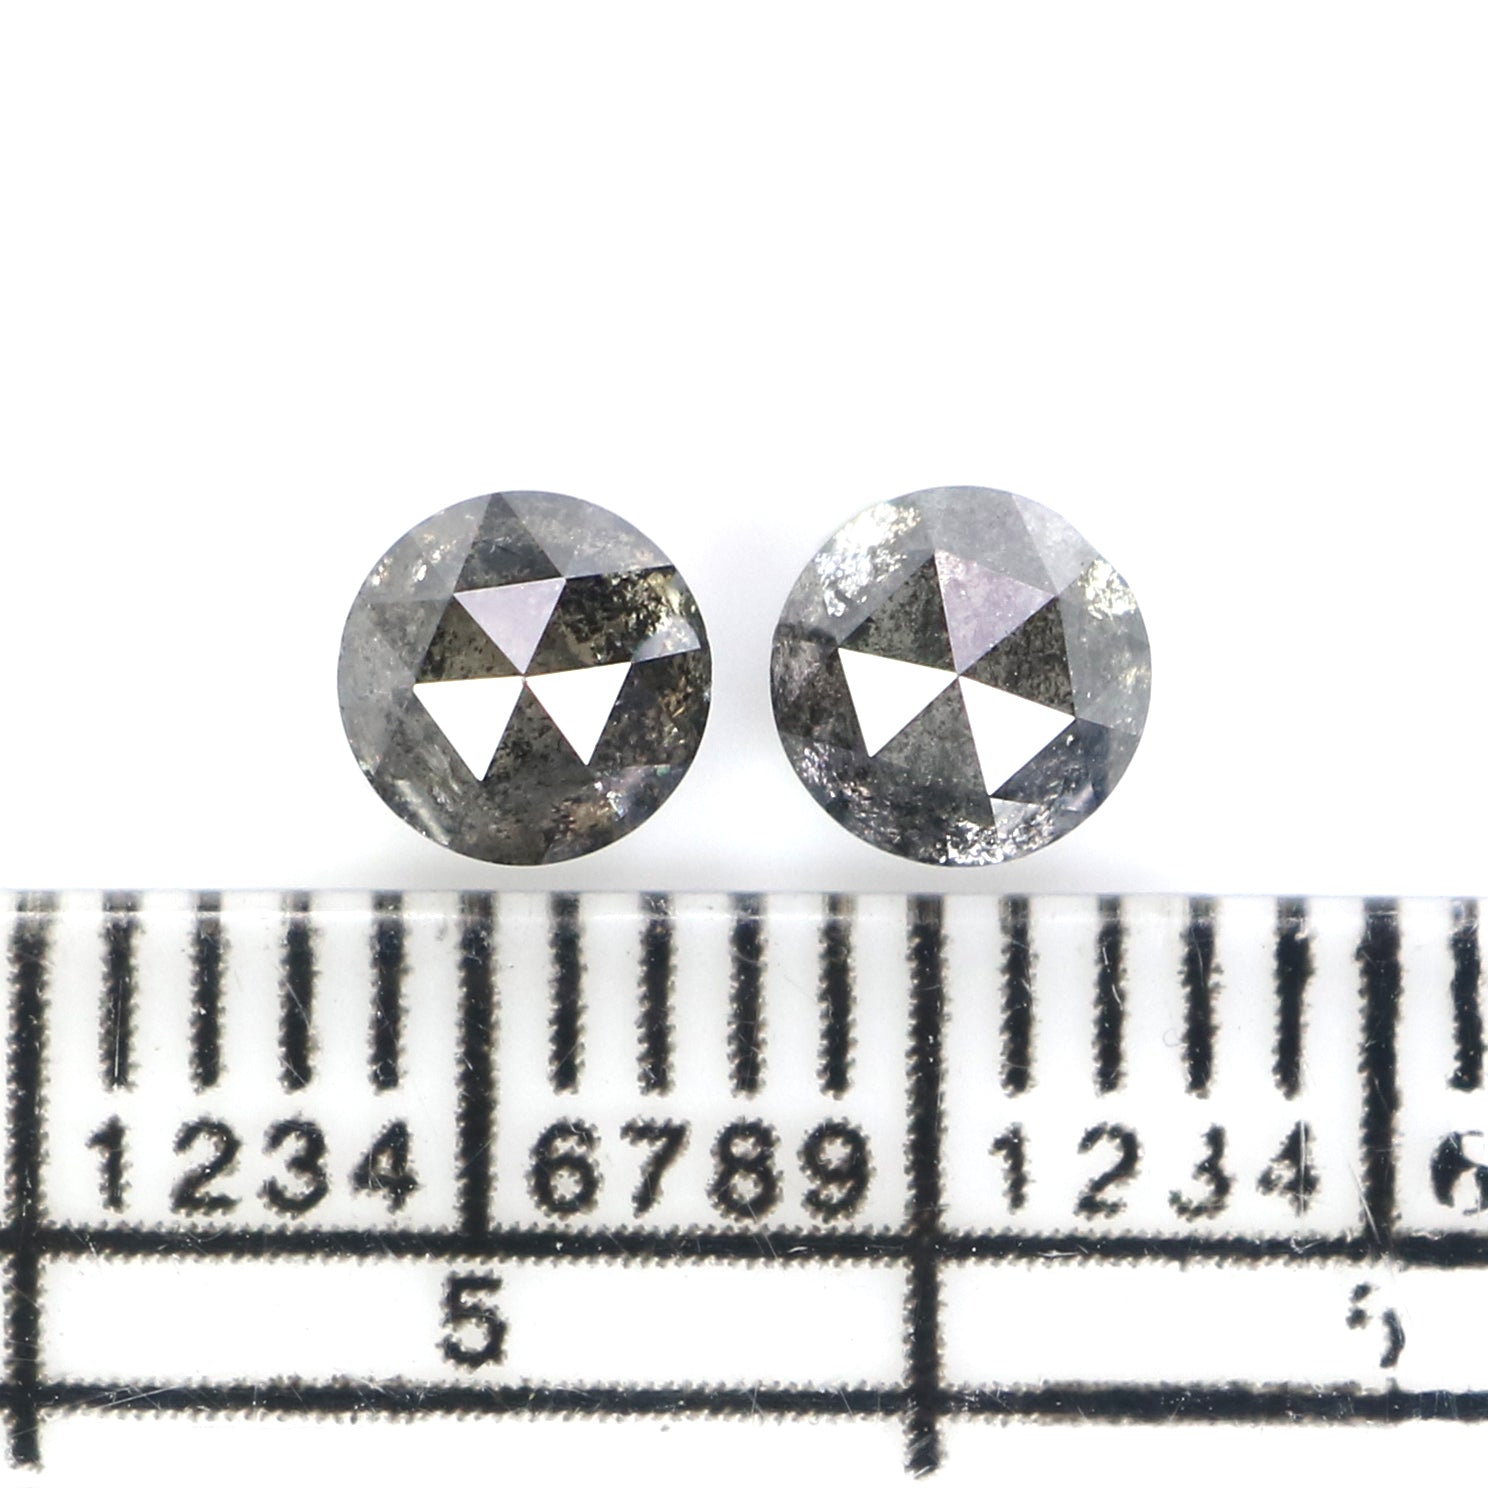 Natural Loose Round Rose Cut Diamond, Salt And Pepper Round Diamond, Natural Loose Diamond, Rose Cut Diamond, 0.83 CT Round Shape L2810